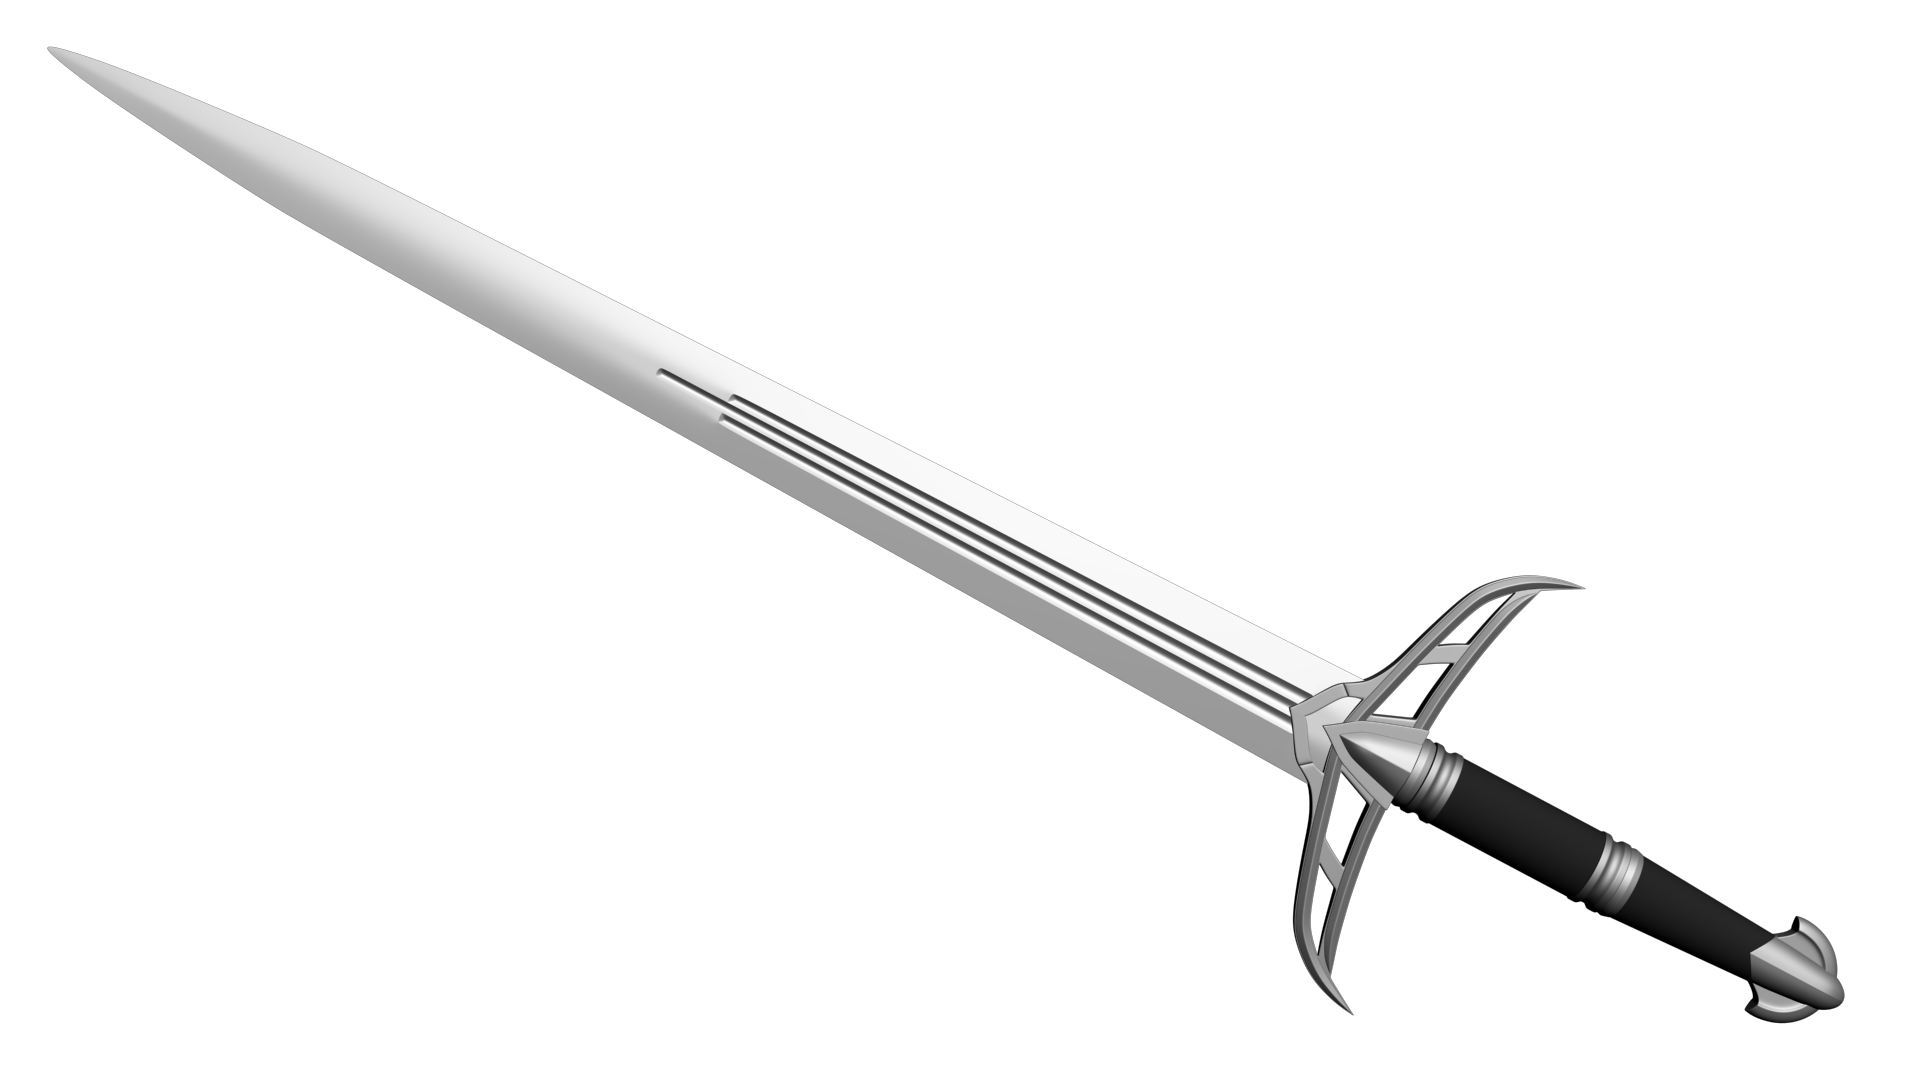 Swords Have A Purpose